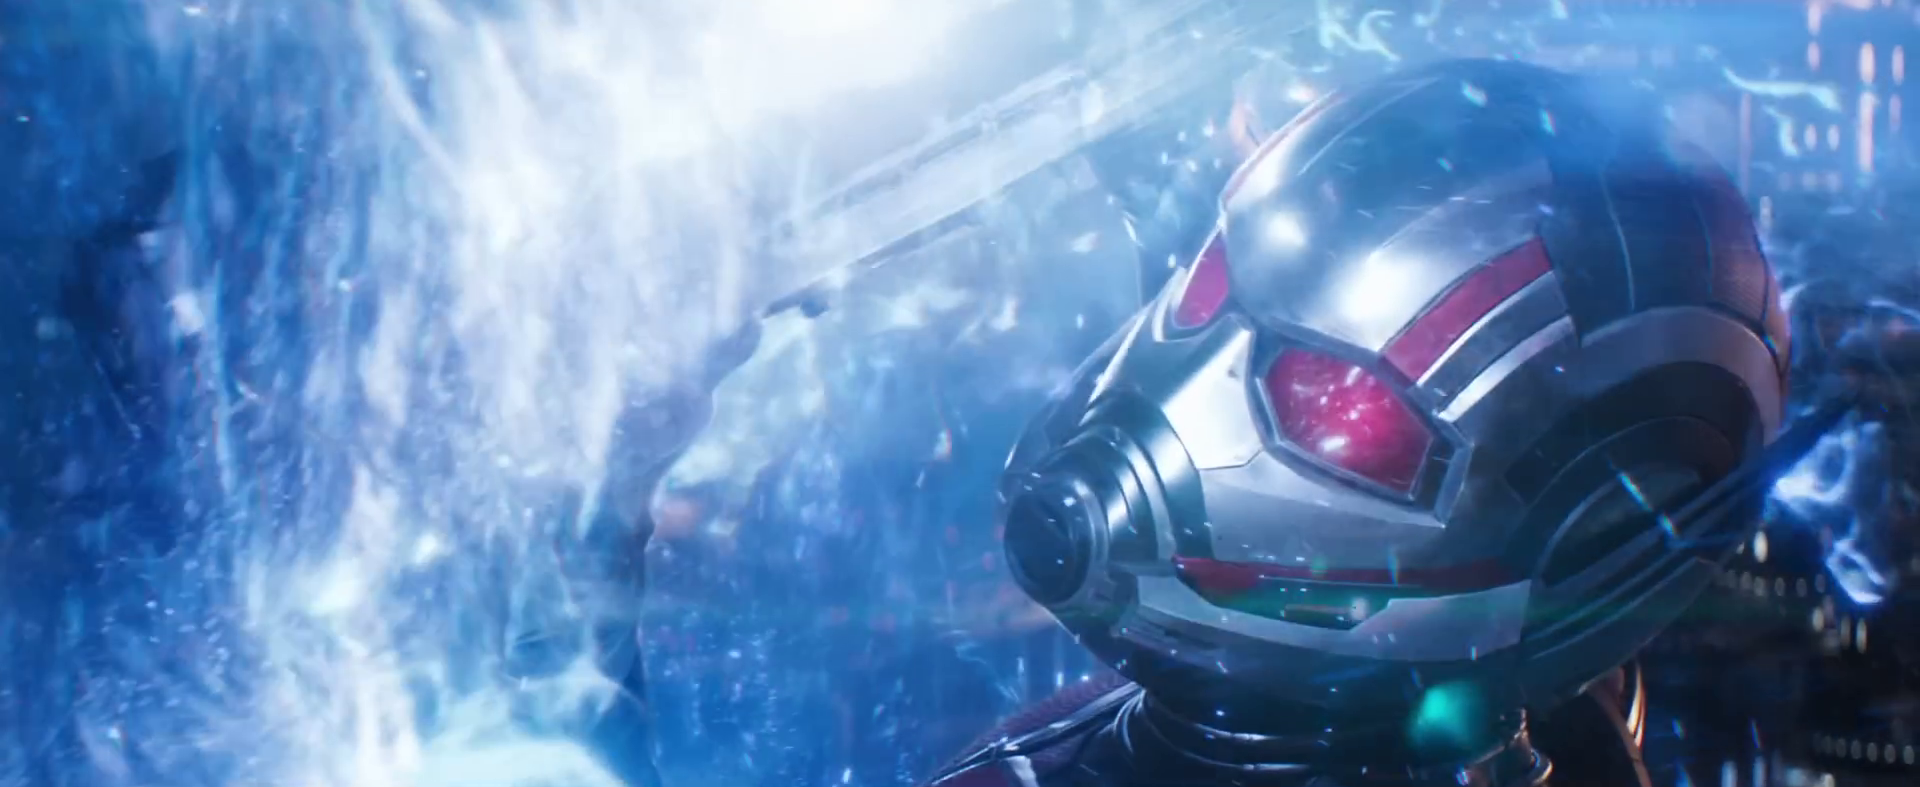 Jonathan Majors Lands Lead Role in 'Ant-Man 3,' Marvel Universe – Deadline